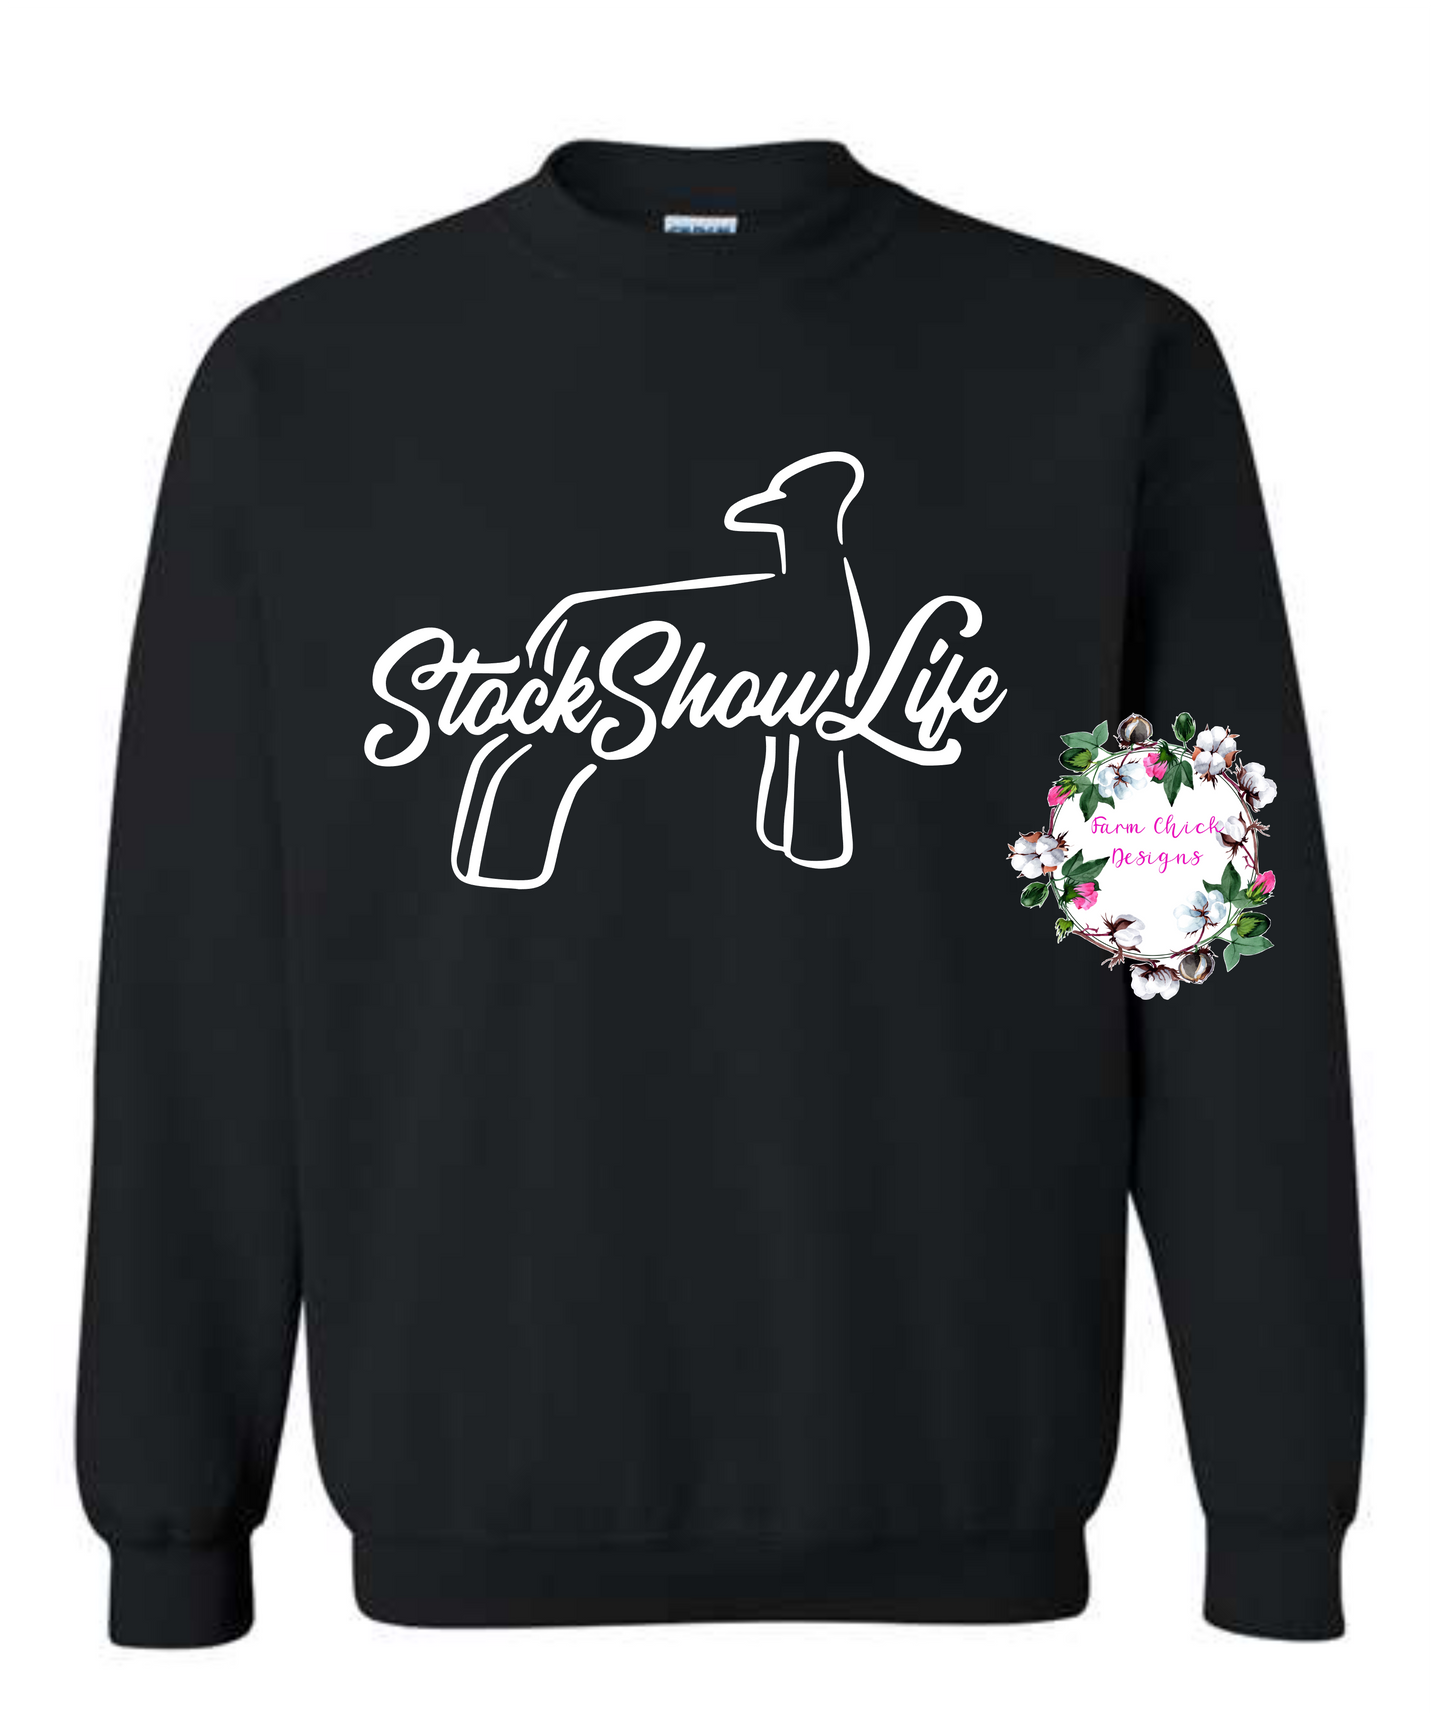 Show Lamb Stock Show Life Adult Sweatshirt